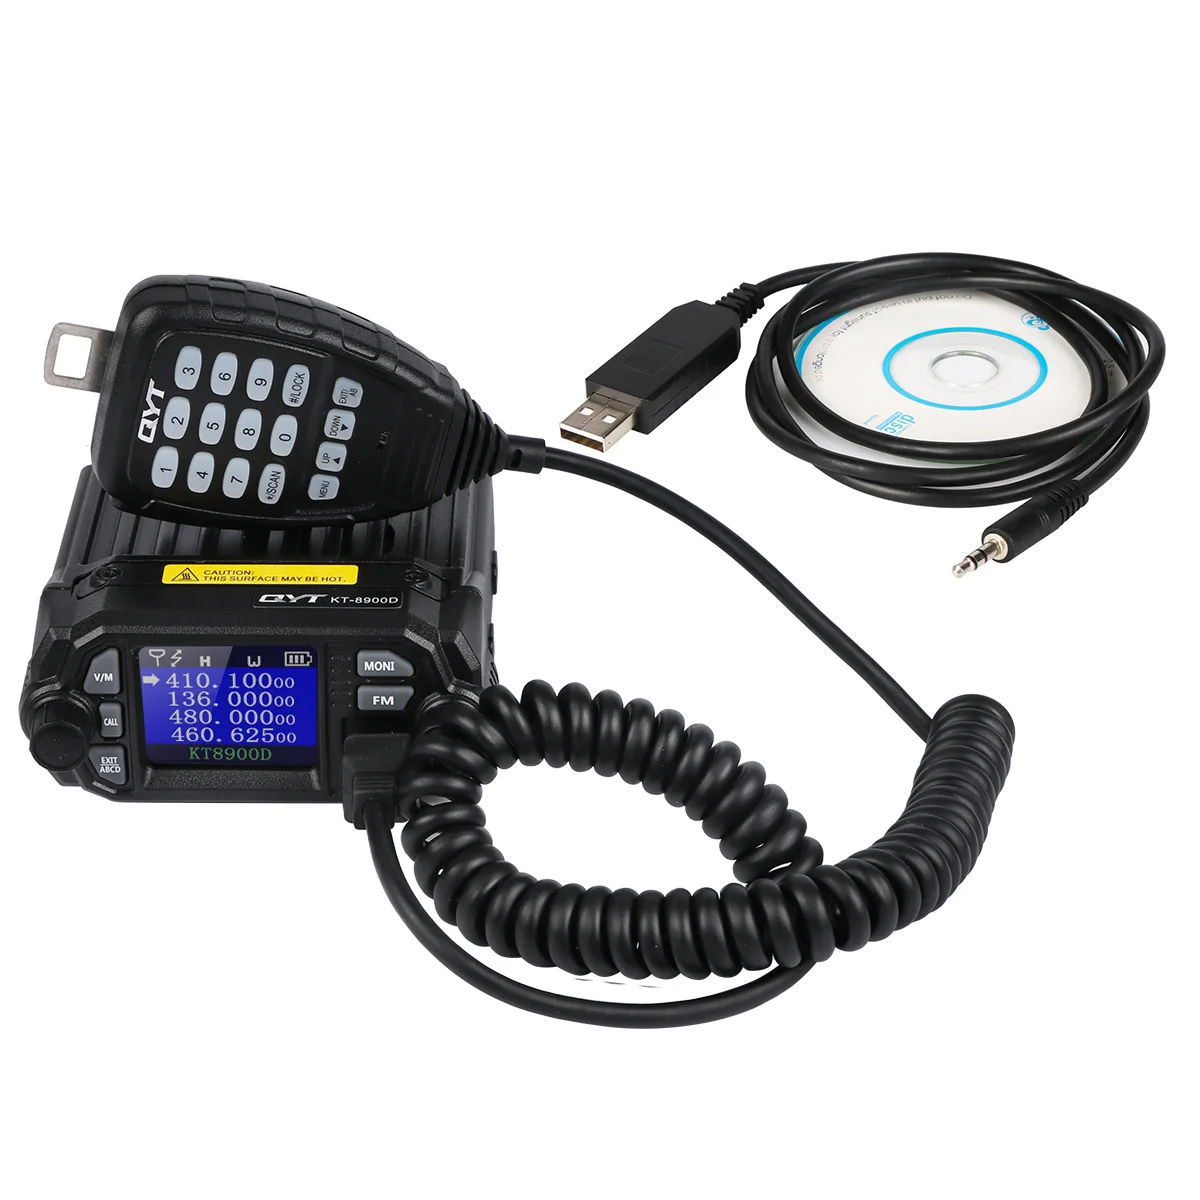 QYT KT-8900D Quad Band Car Mobile Radio 2 way radio Quad Display Mini Car radio 25W Walkie talkie transceiver with Power Supply